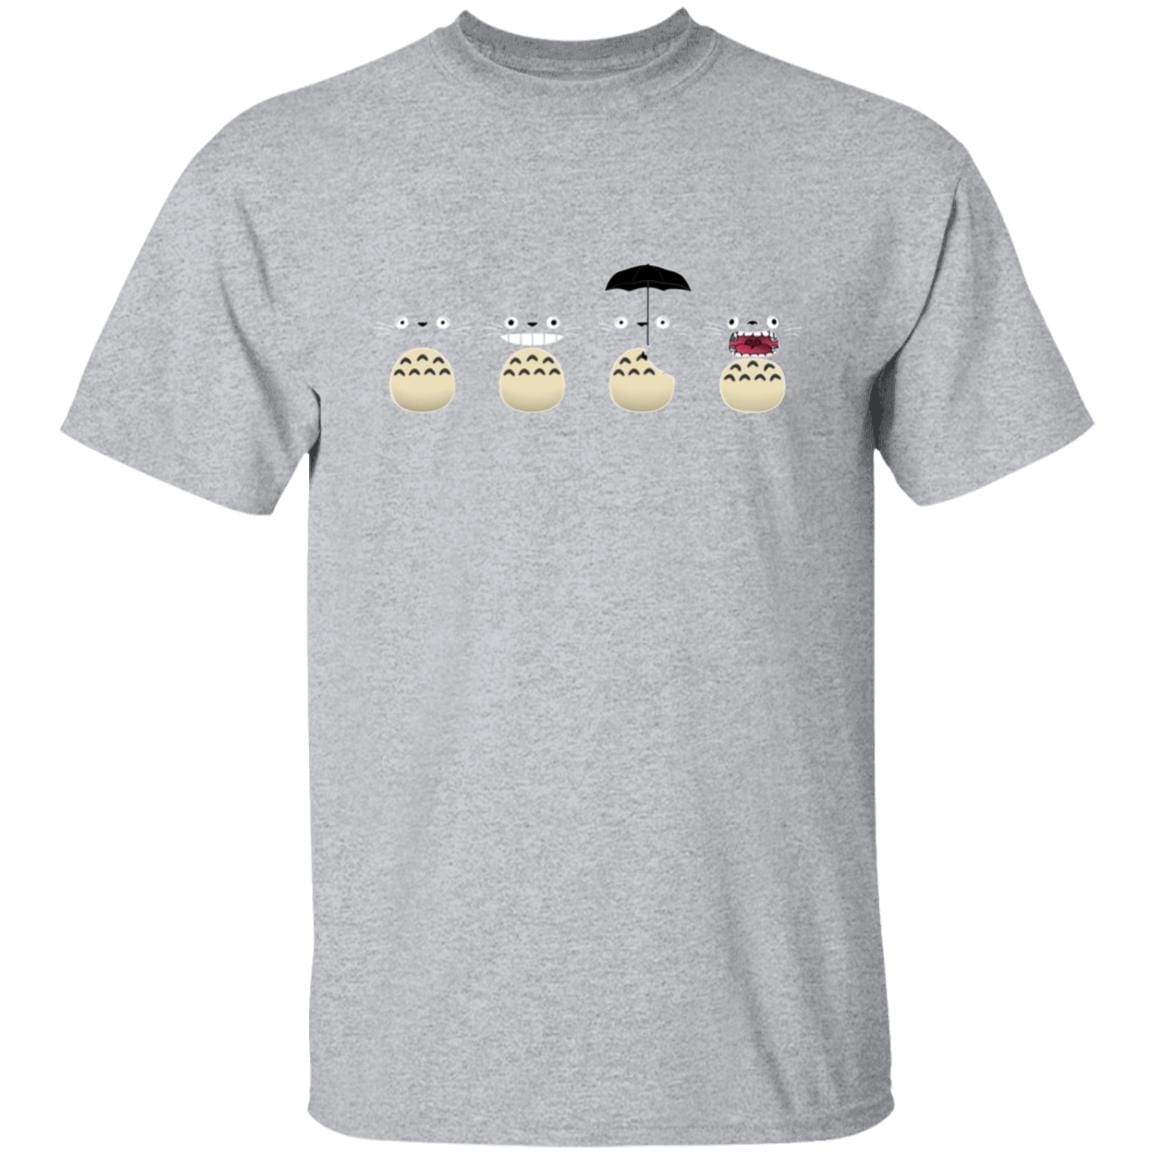 Totoro Faces T Shirt